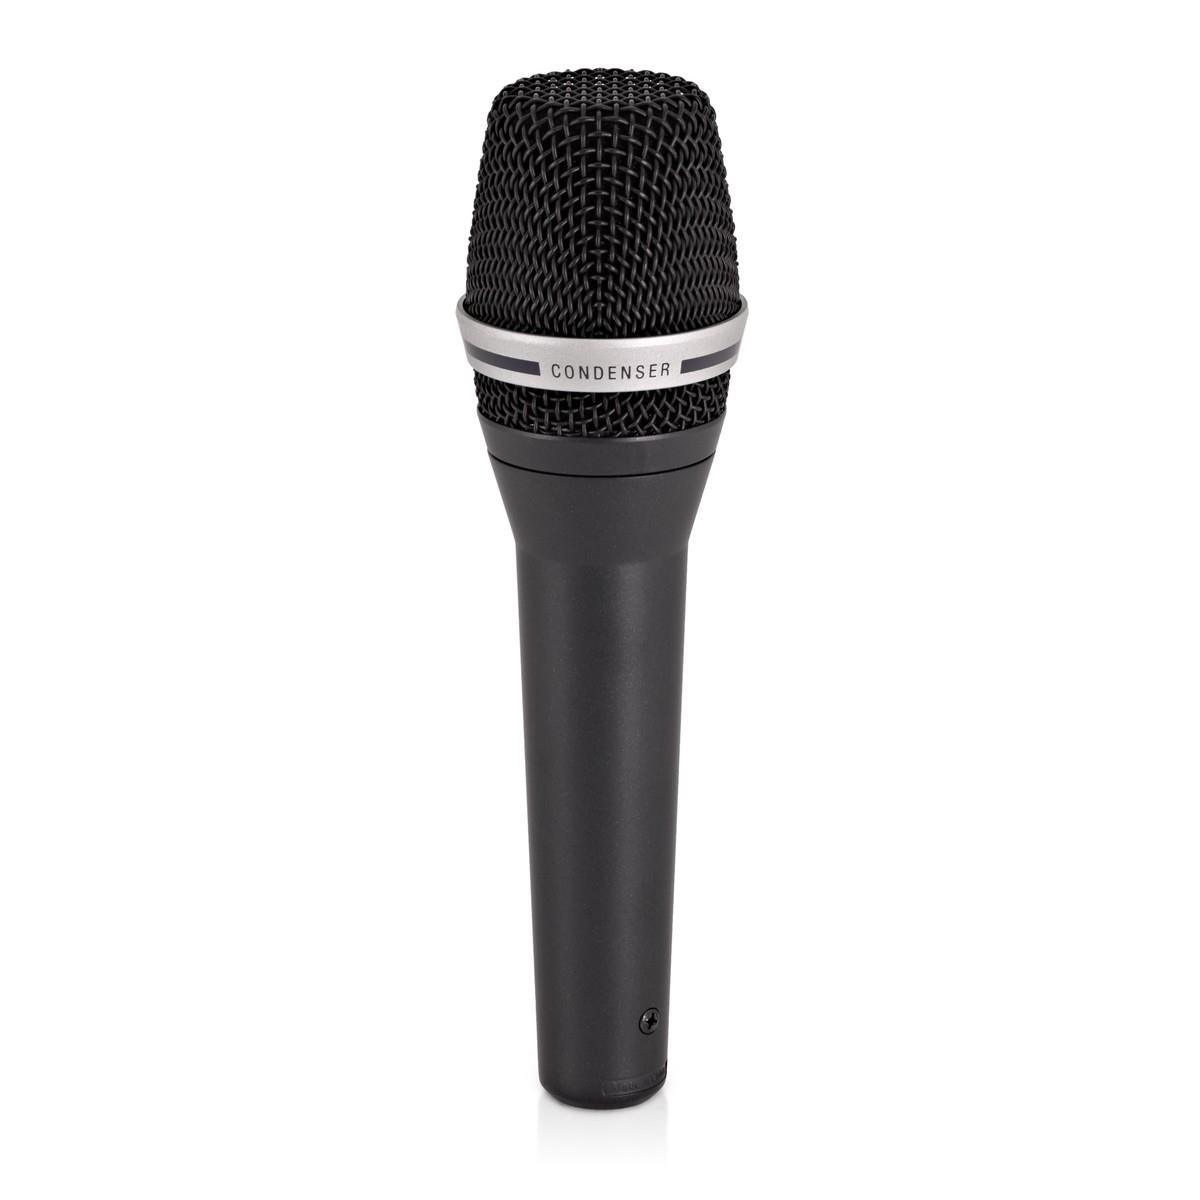 AKG C5 Professional Vocal Condenser Microphone - DY Pro Audio